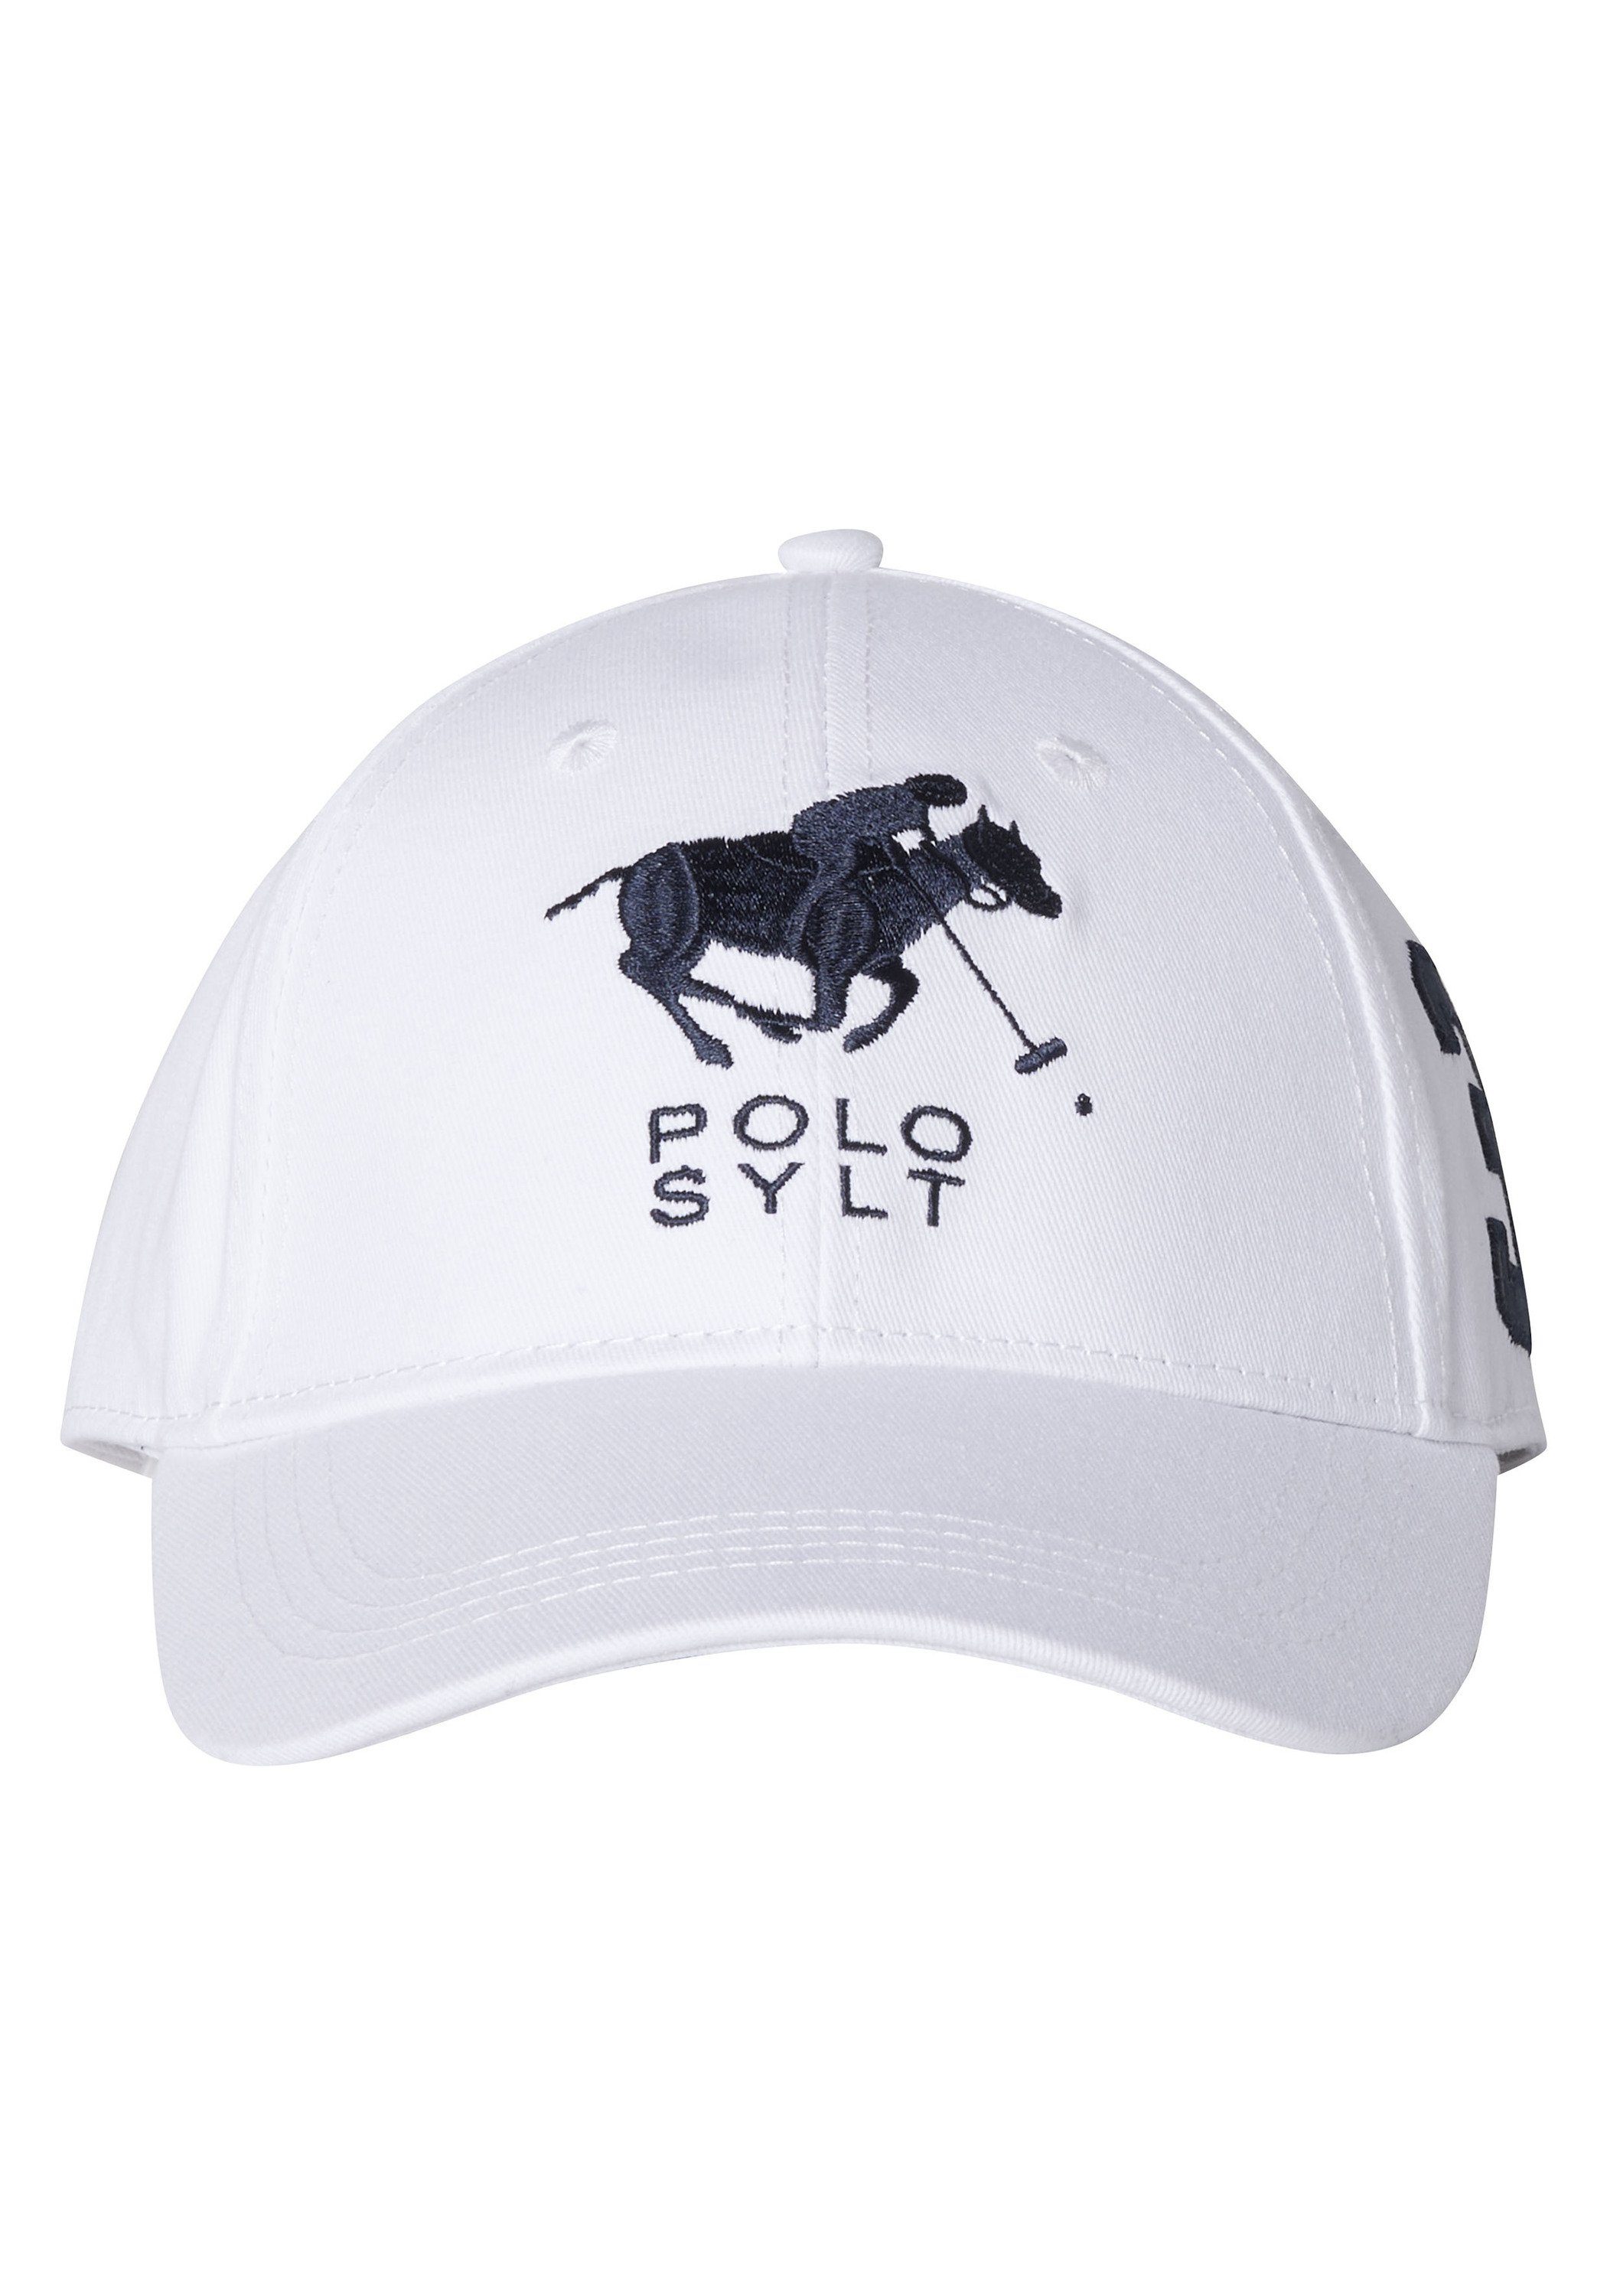 Polo Sylt Baseball Cap im Label-Design 1048 Wht/Dk Blue Dif